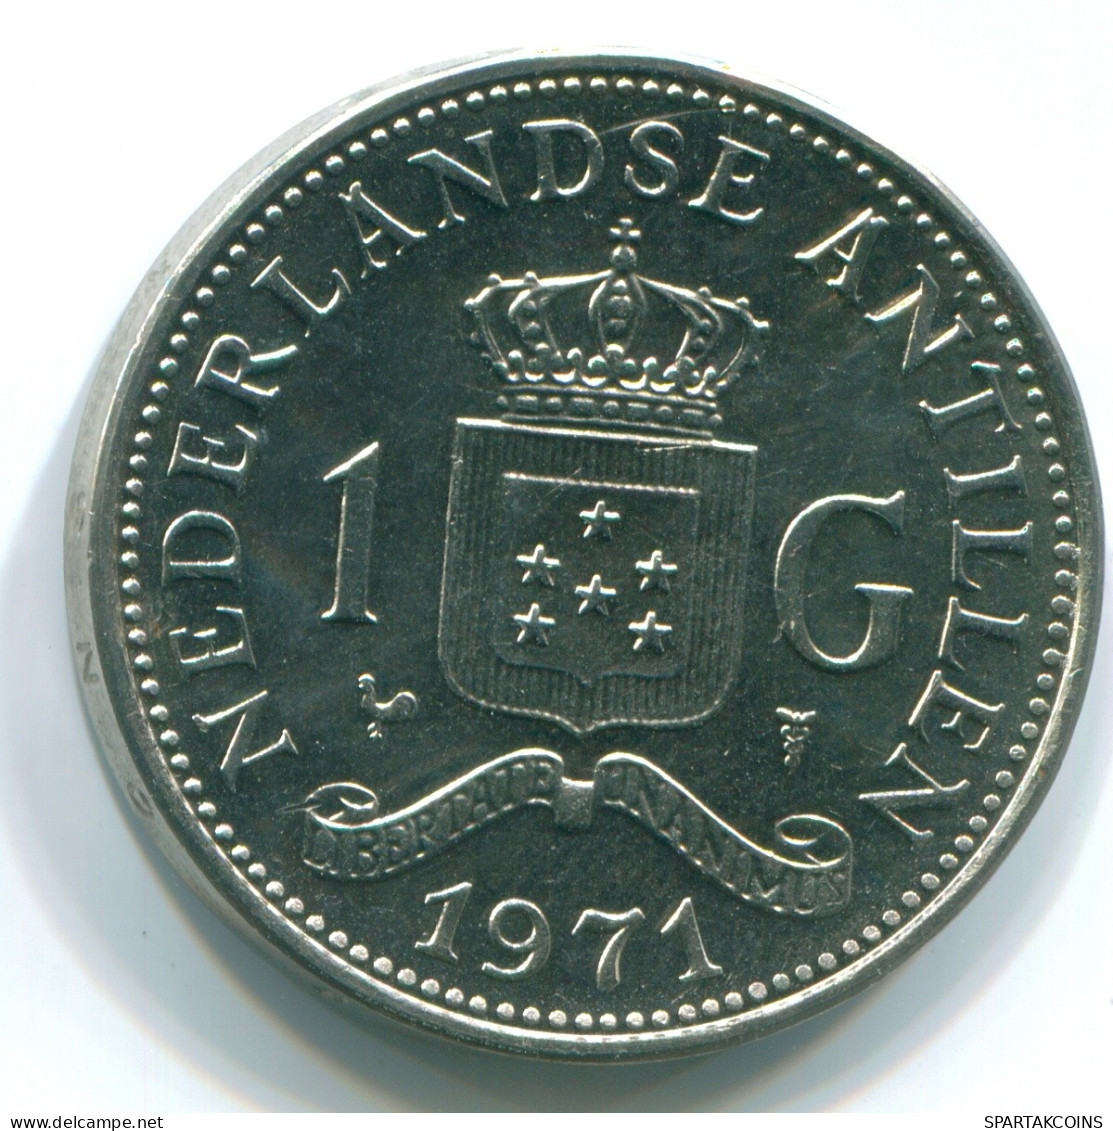 1 GULDEN 1971 NETHERLANDS ANTILLES Nickel Colonial Coin #S11914.U.A - Antille Olandesi